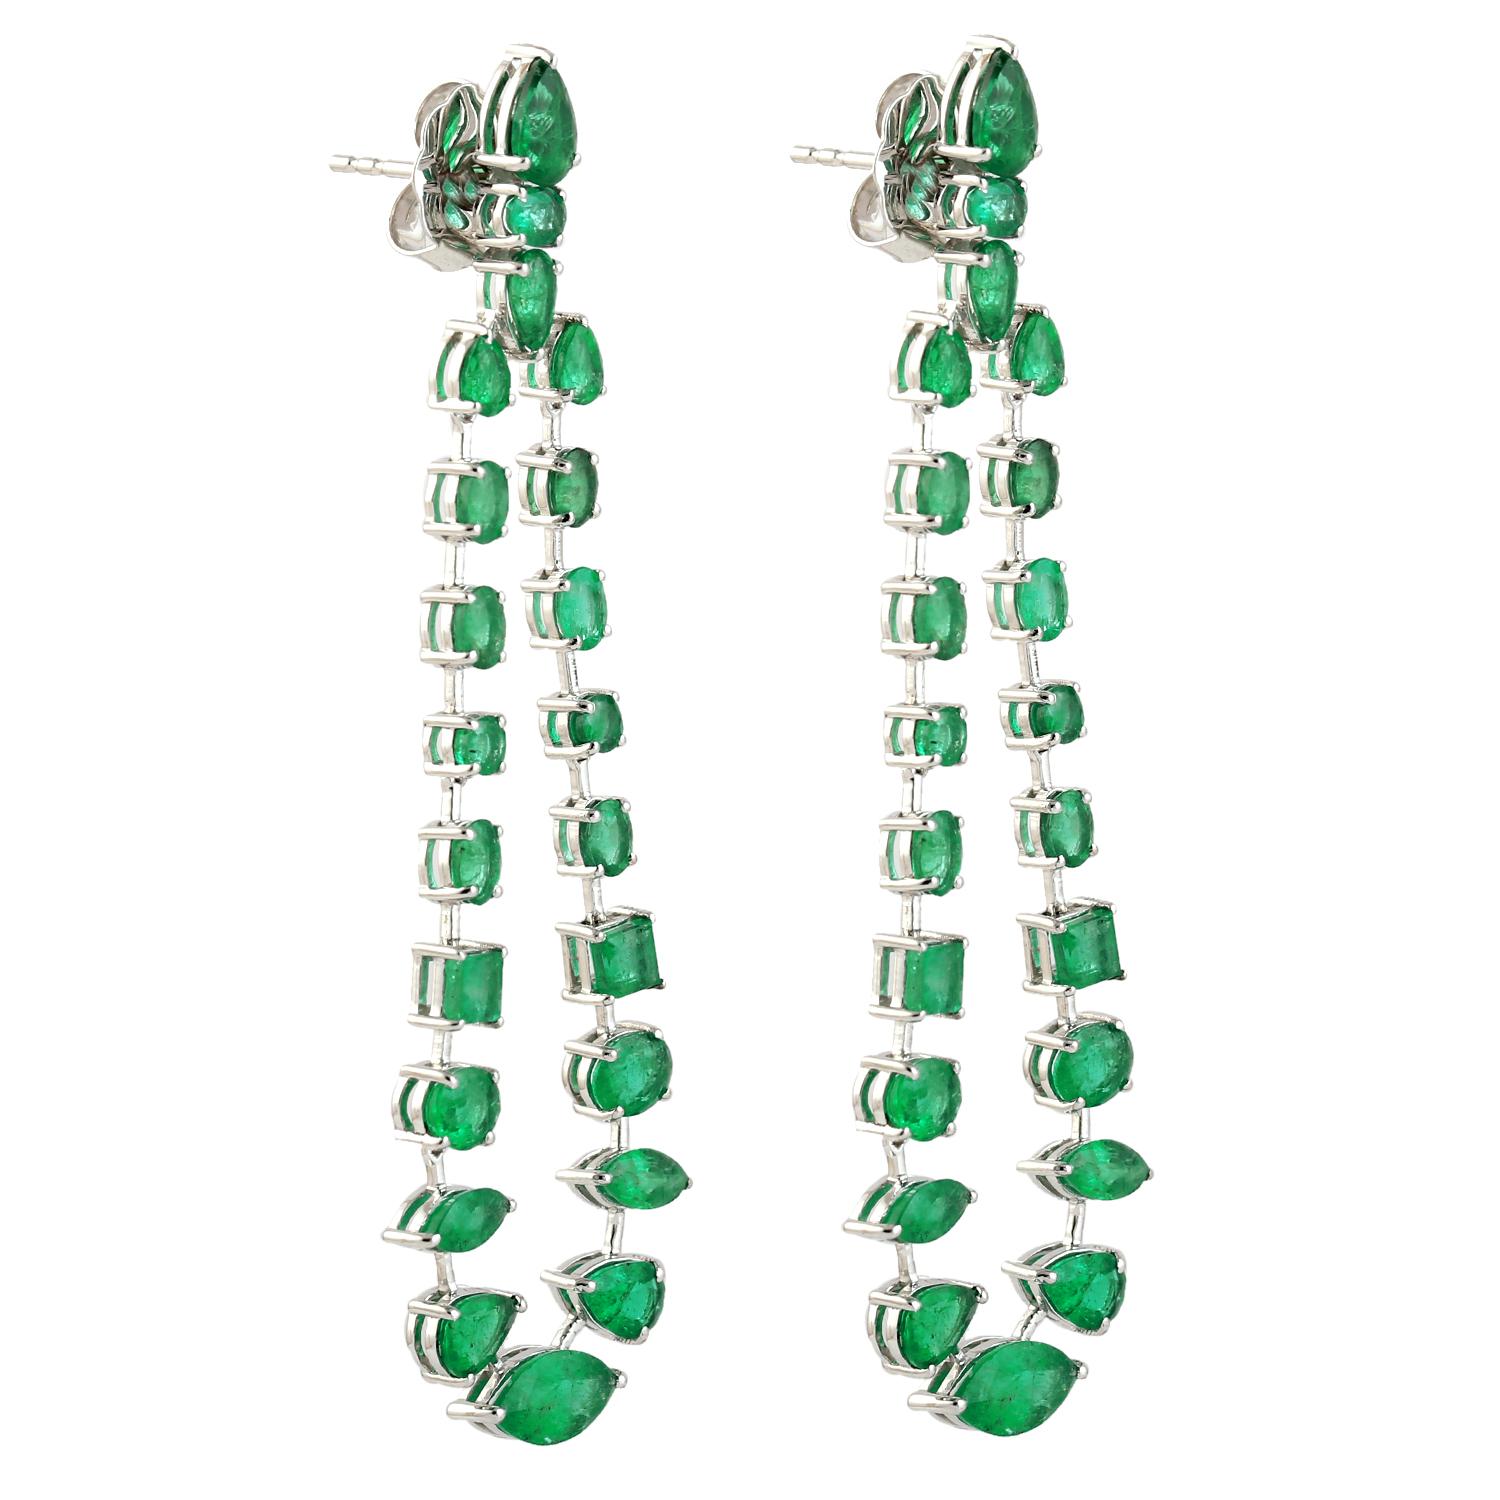 Mixed Cut Multi Shaped Zambian Emerald Chandelier Earring Made in 18k White Gold For Sale